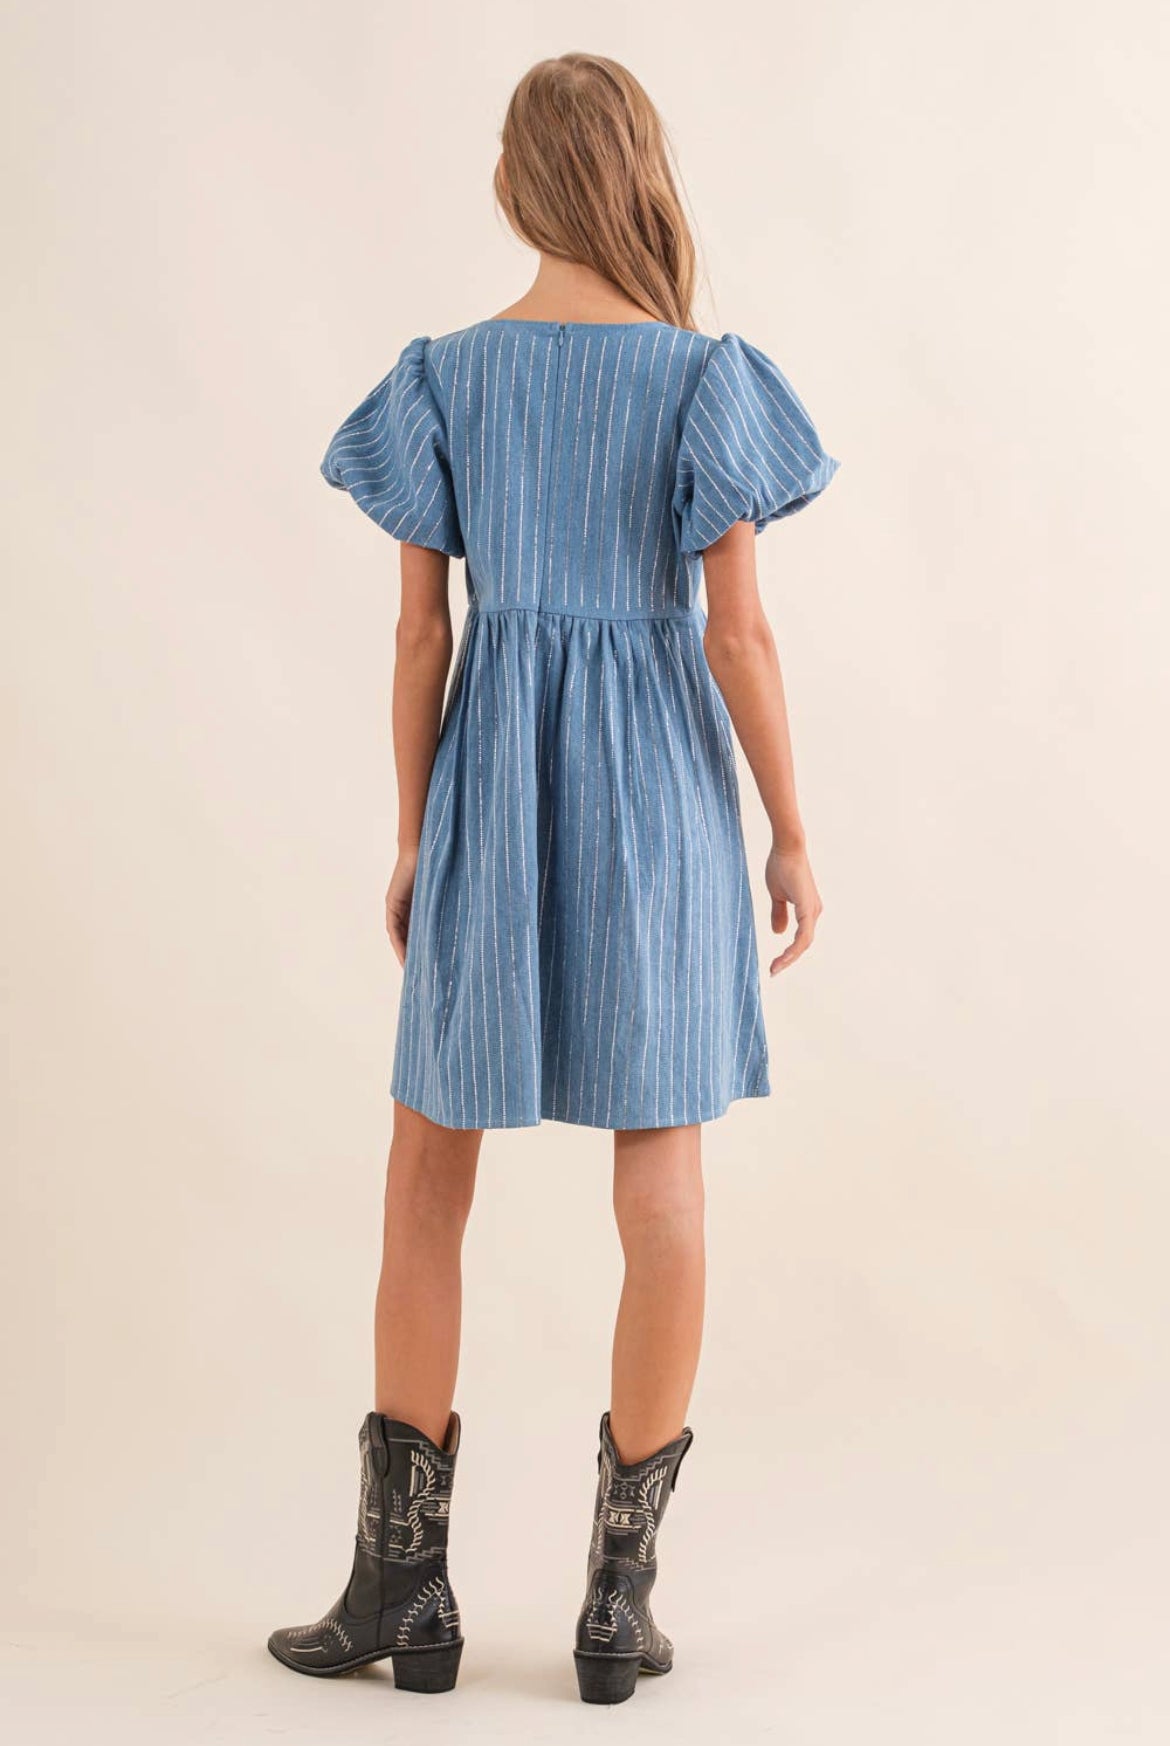 Jolene Denim + Rhinestone Dress